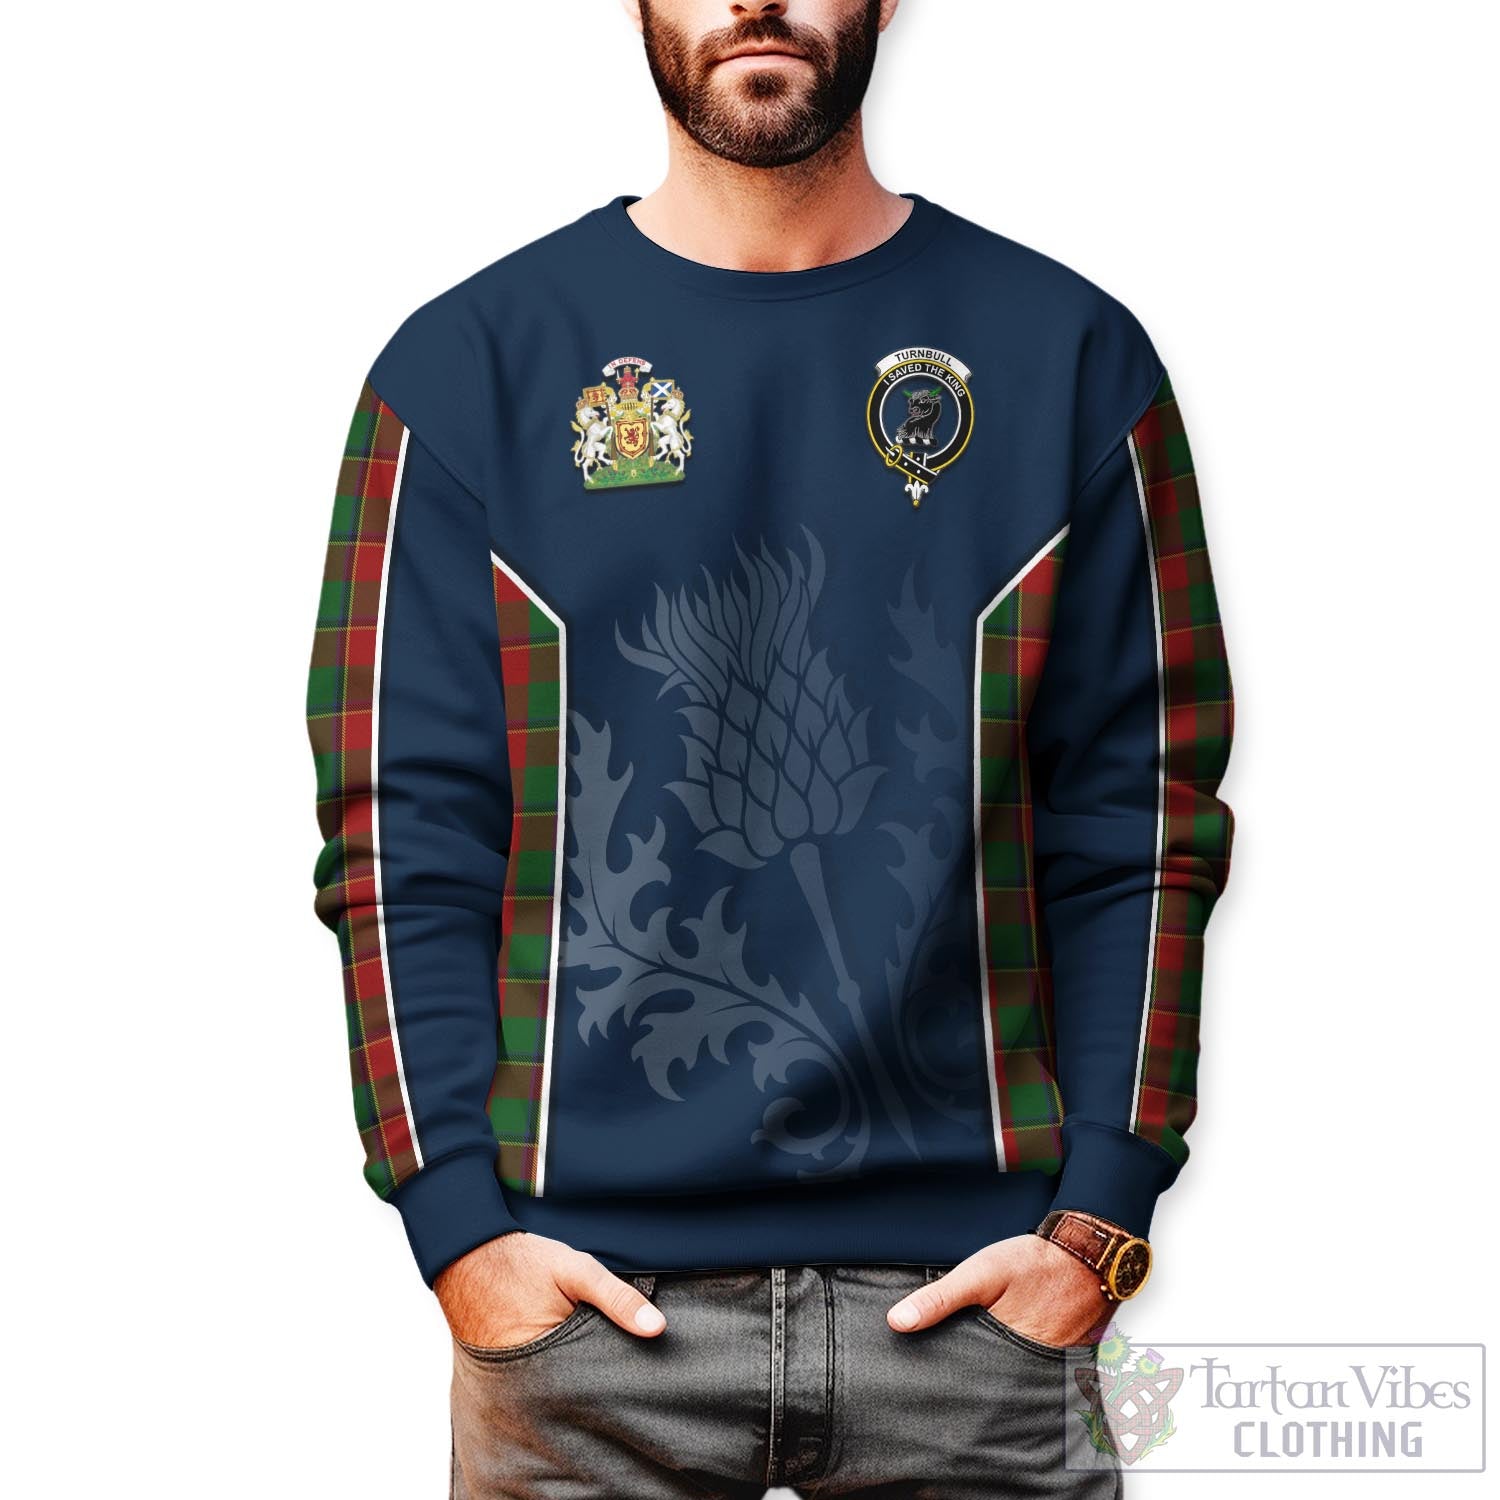 Tartan Vibes Clothing Turnbull Dress Tartan Sweatshirt with Family Crest and Scottish Thistle Vibes Sport Style